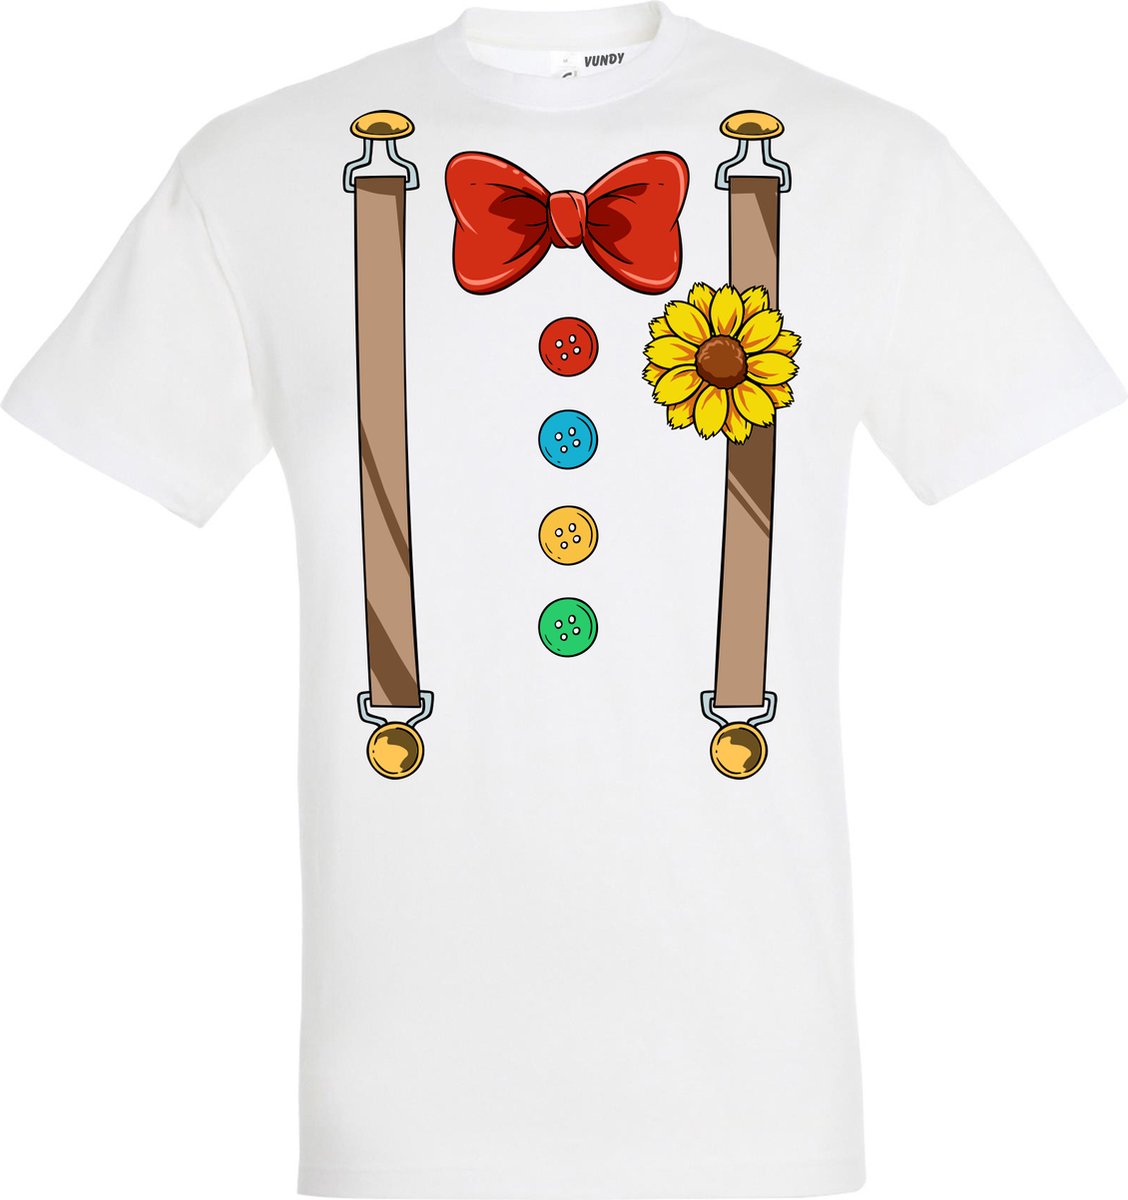 T-shirt Bretels Kostuum | Carnaval | Carnavalskleding Dames Heren | Wit | maat 3XL